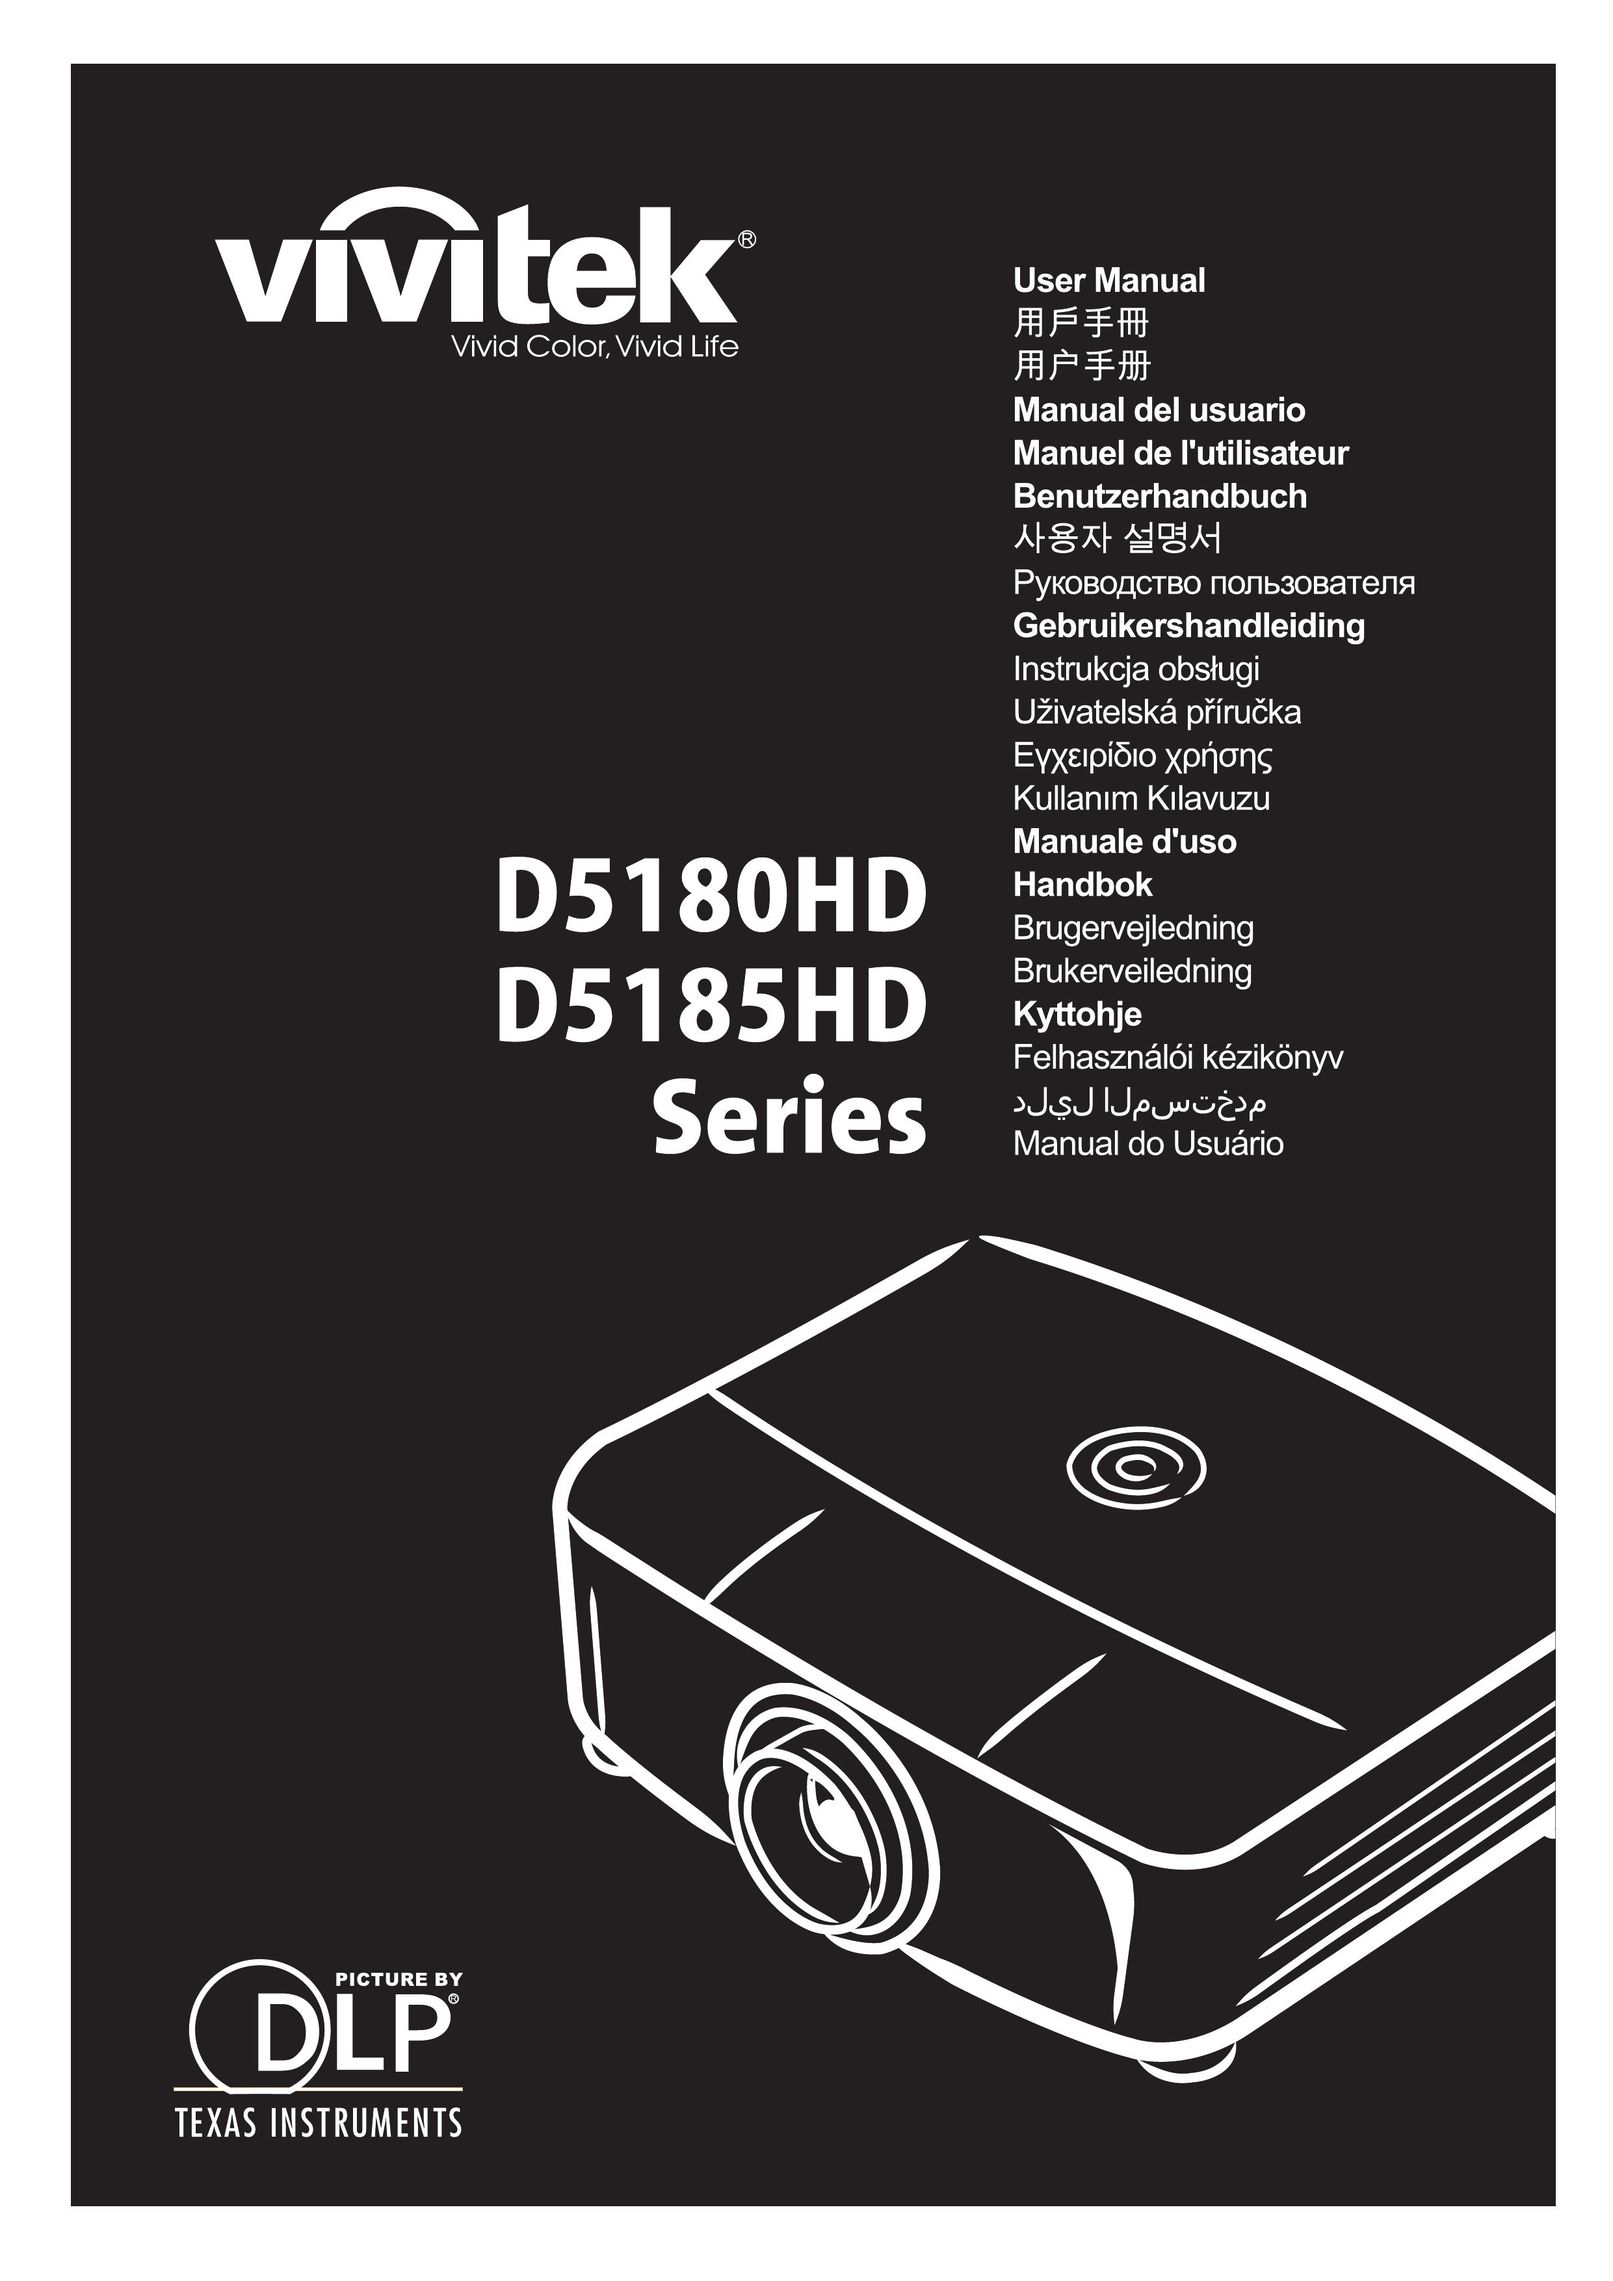 Vivitek D5185HD Projector User Manual